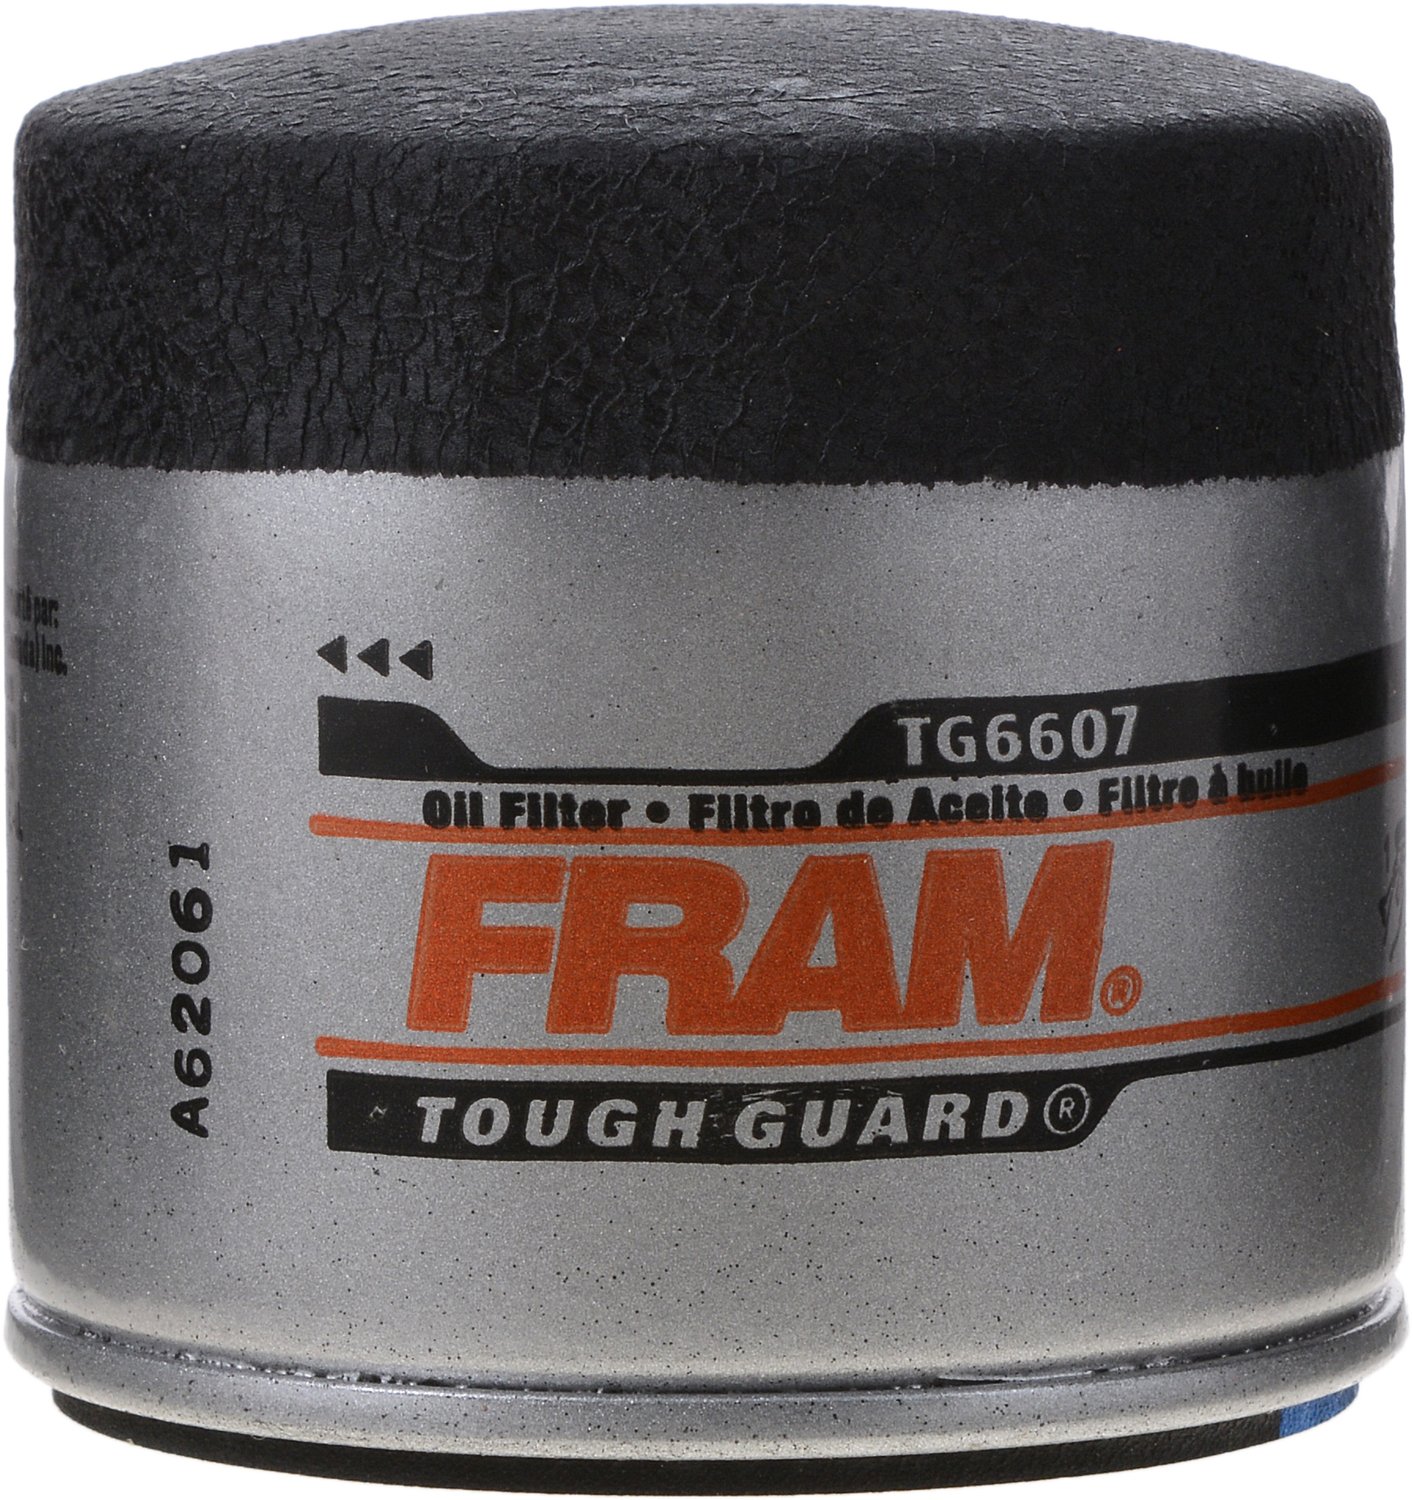 Tough Guard Oil Filter for 1988-Late Multi-Application